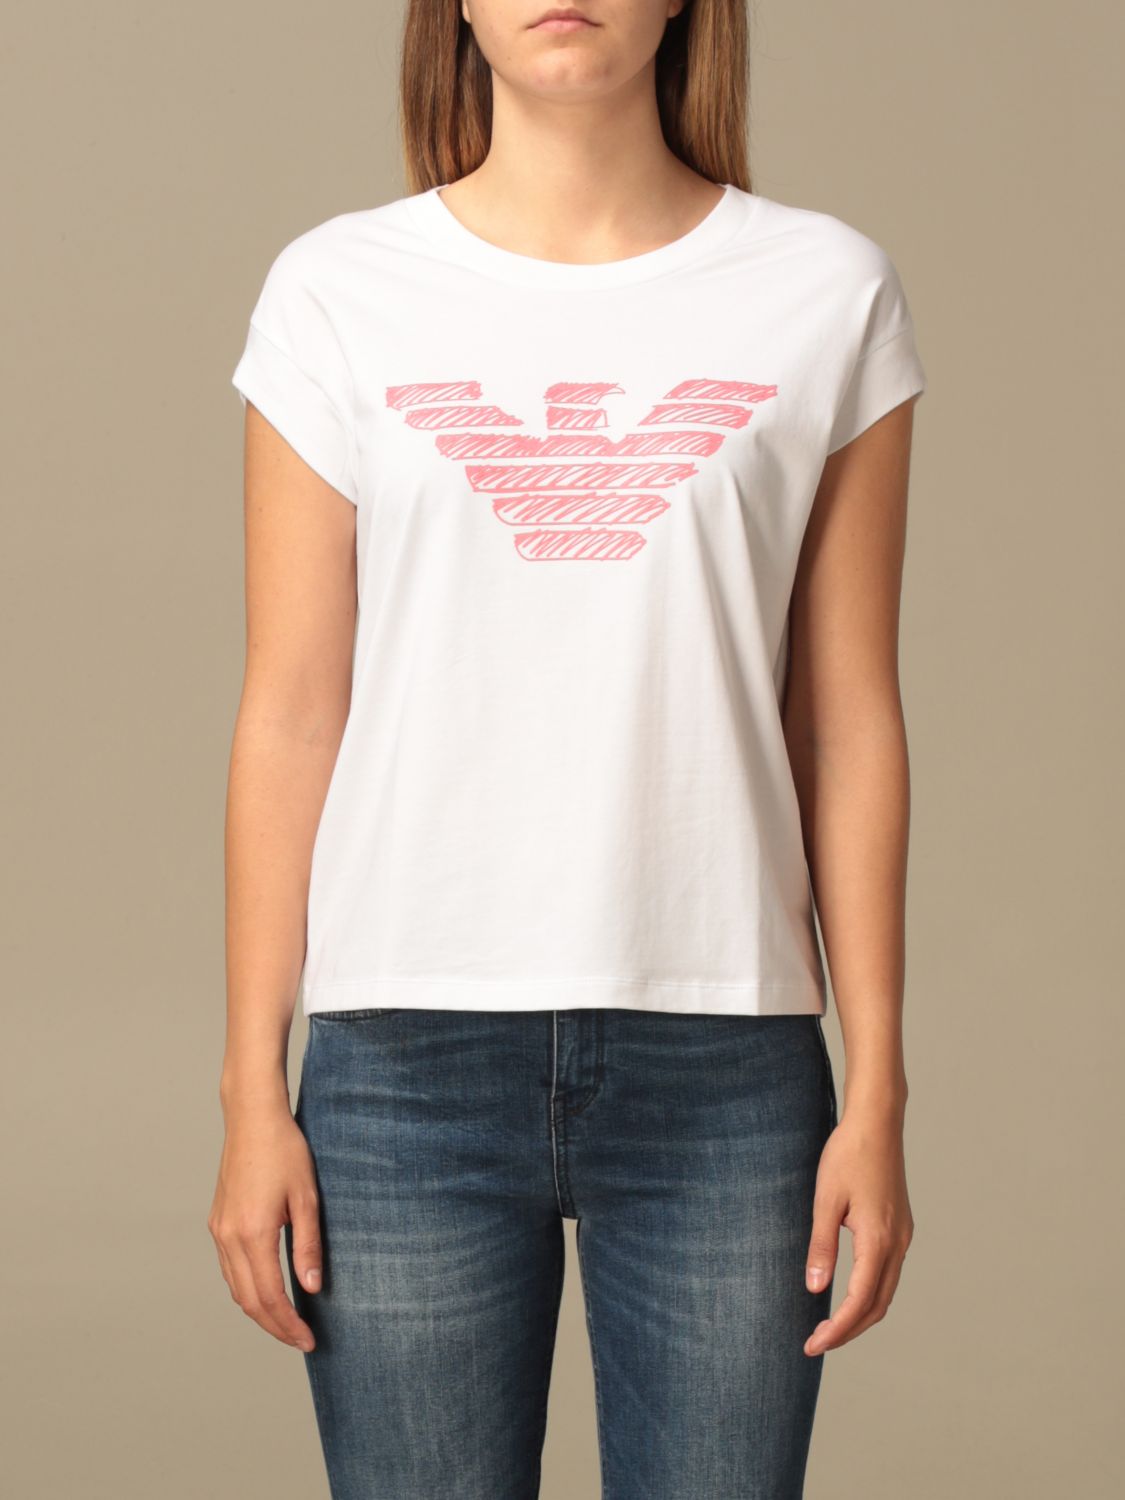 Vermoorden De databank Necklet Emporio Armani Outlet: t-shirt for woman - White | Emporio Armani t-shirt  3Z2T80 2JQAZ online on GIGLIO.COM